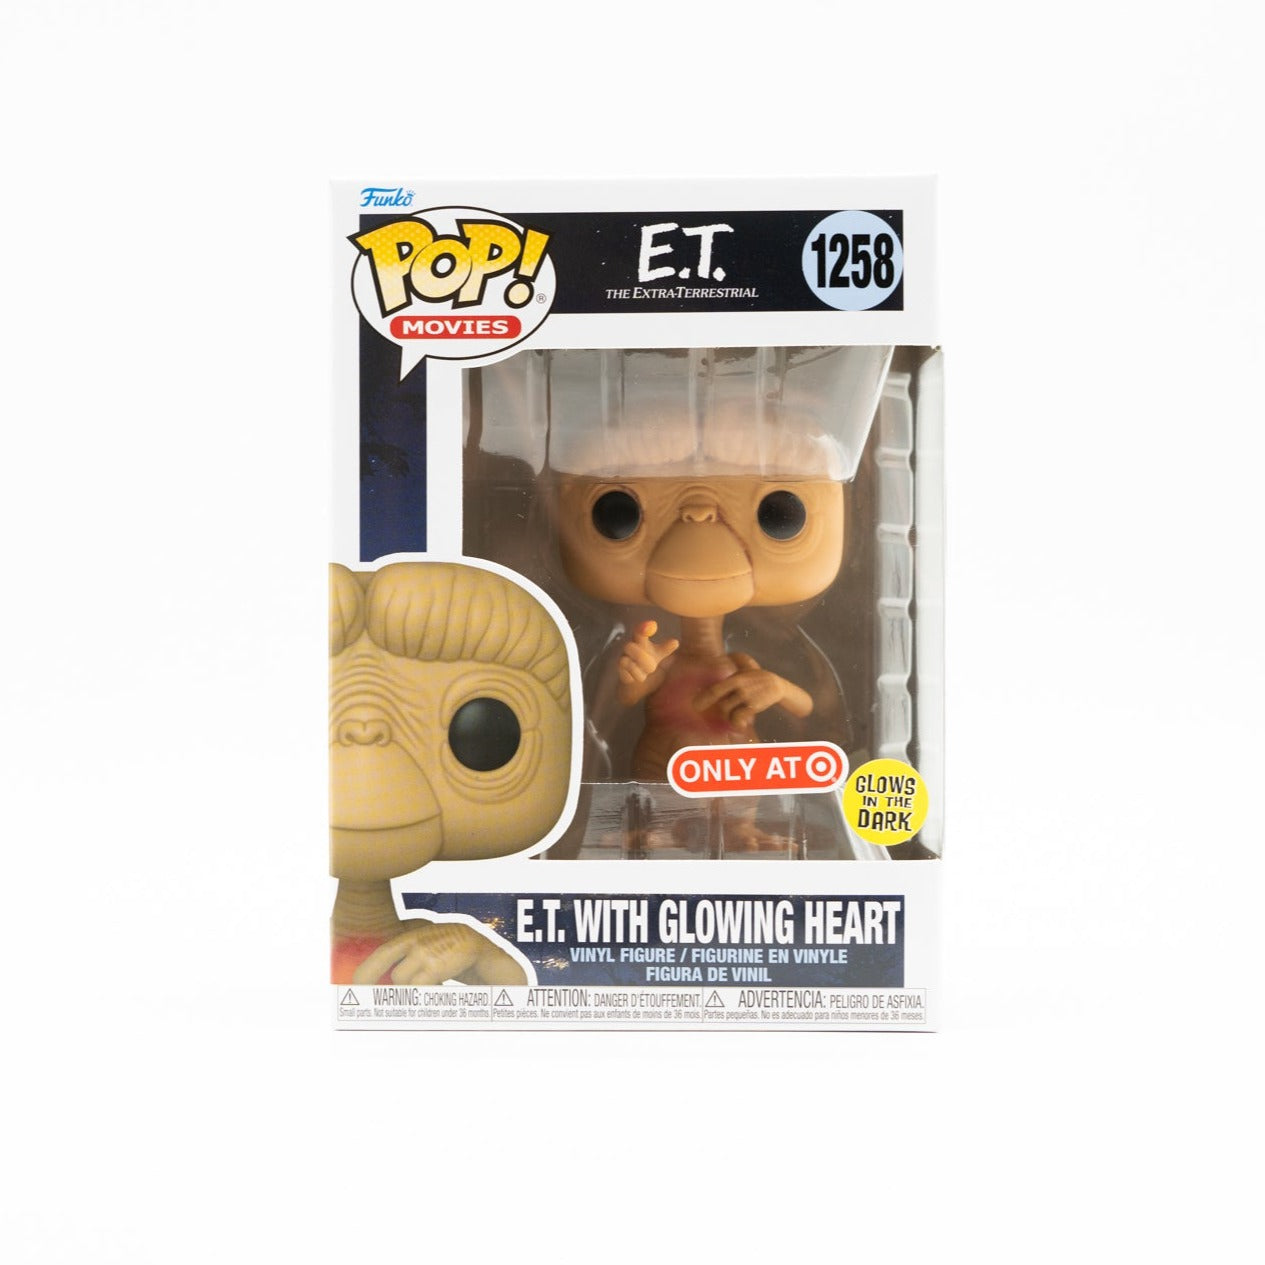 Funko Pop! E.T. #1258 GITD Only at Target